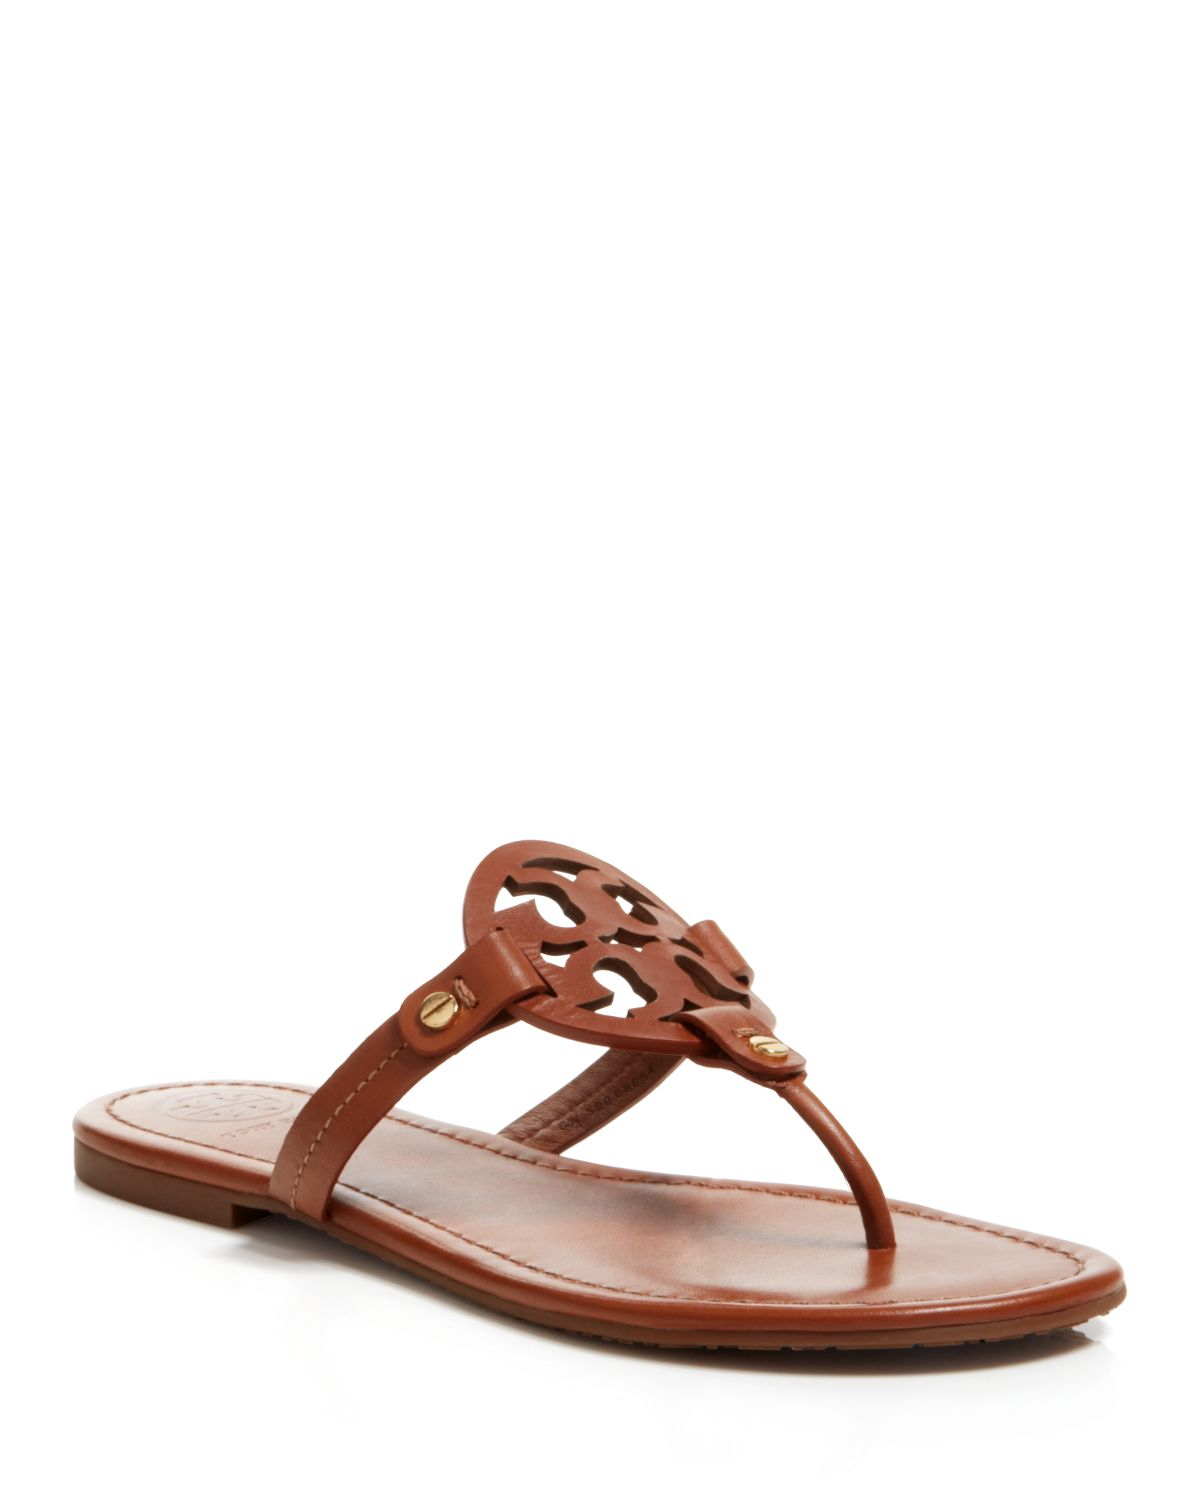 Tory burch Flat Thong Sandals - Miller in Brown (Vintage Vachetta) | Lyst